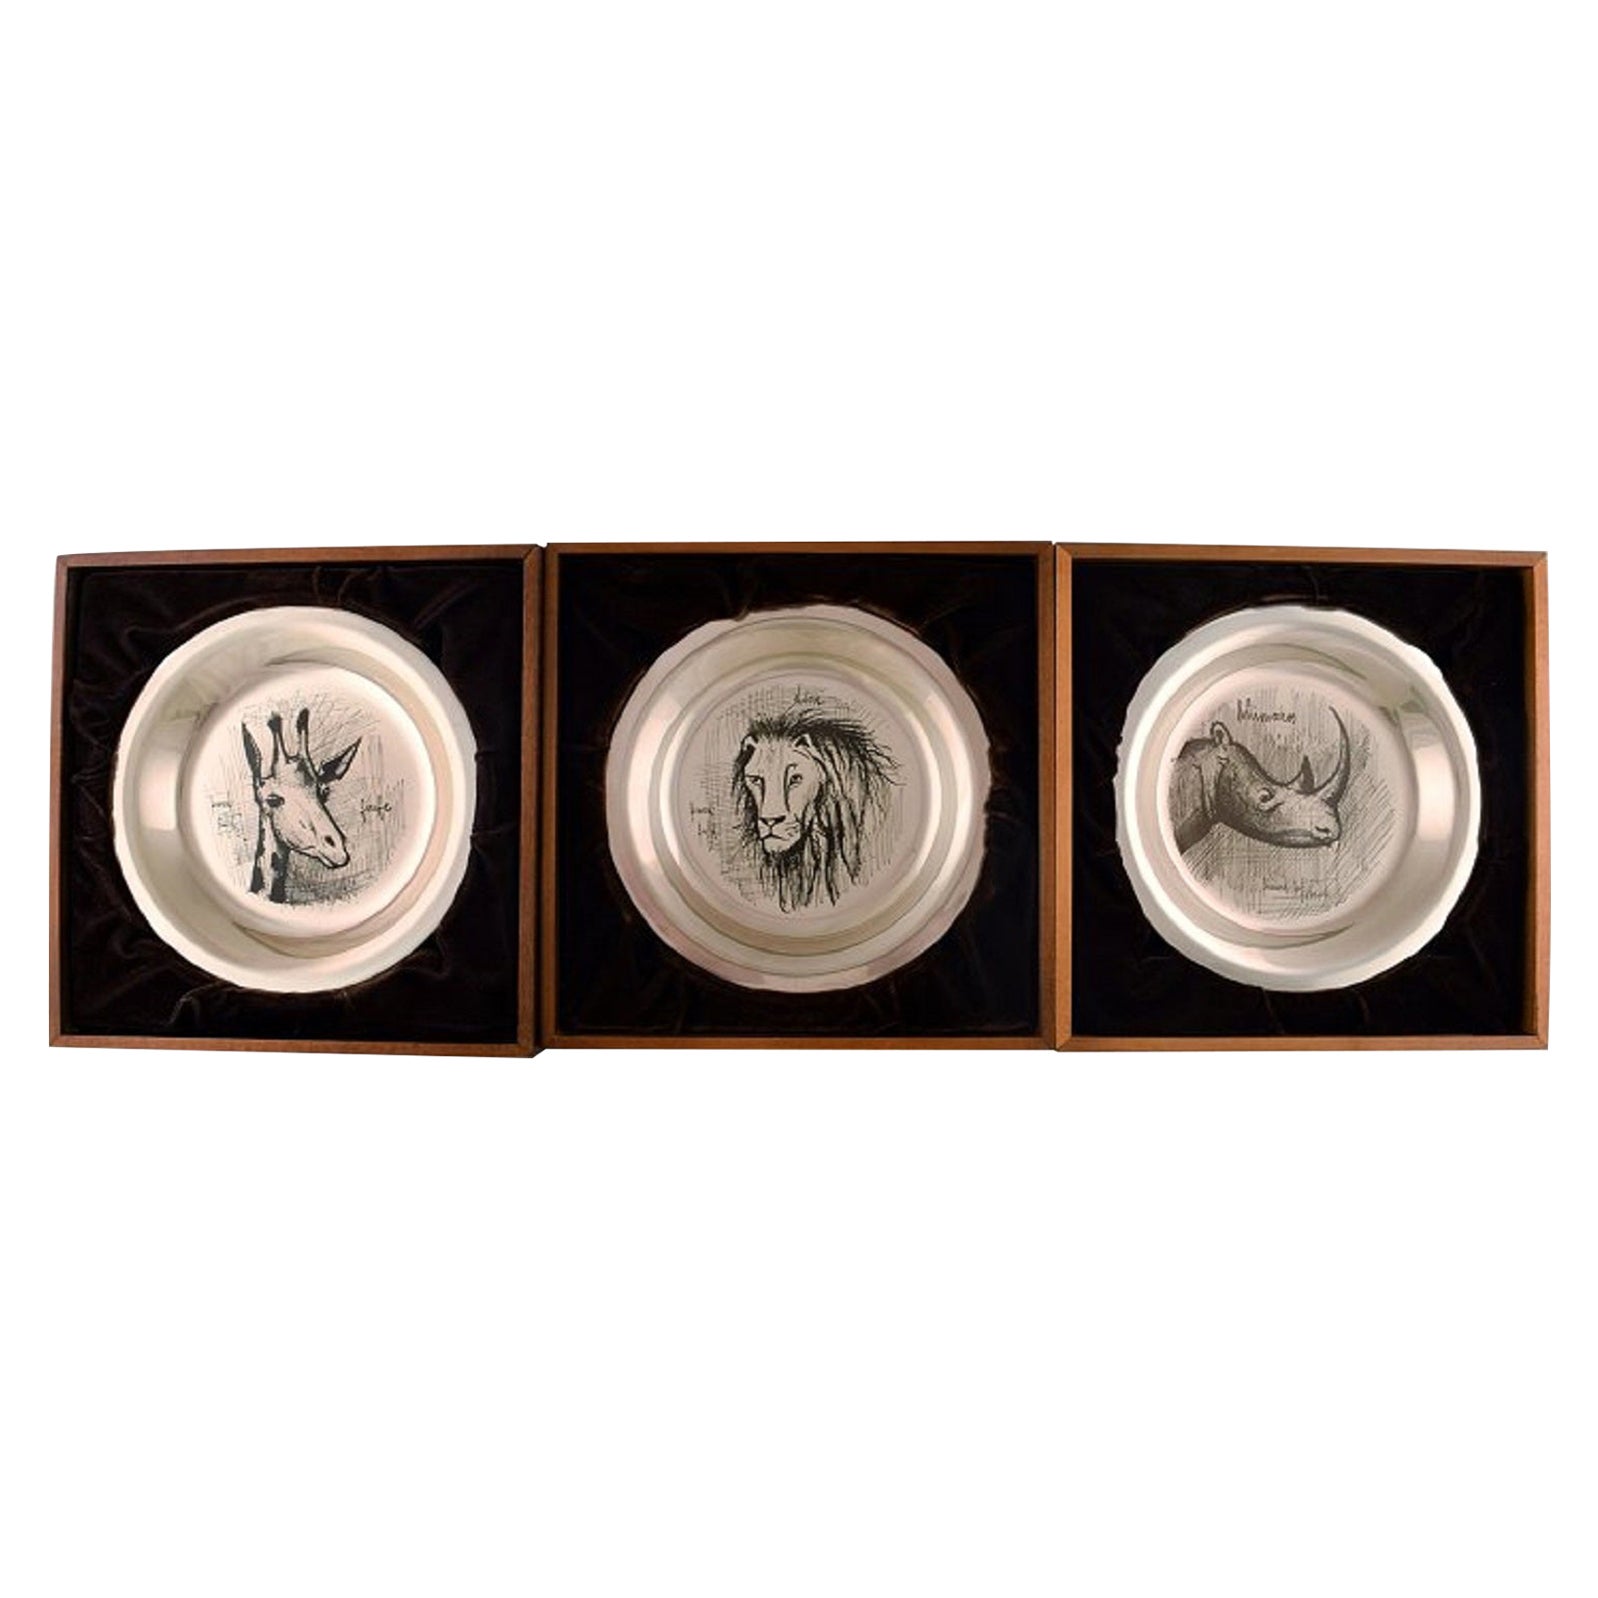 Bernard Buffet, 1928-1999, Three Annual Plates in Sterling Silver